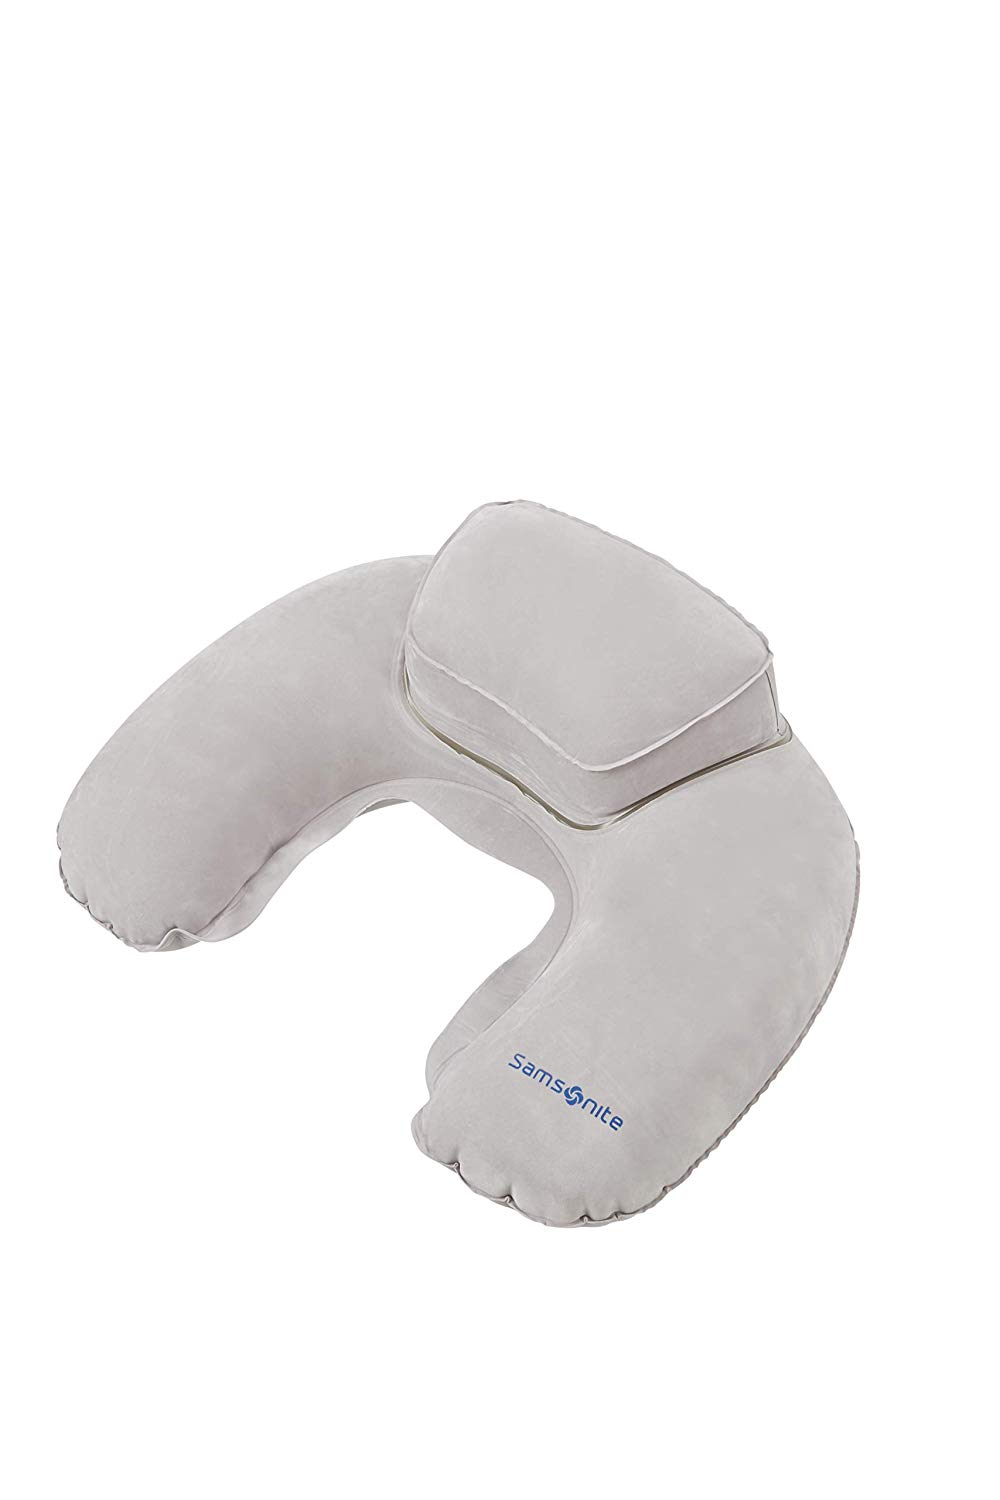 best travel neck pillow | inflatable neck pillow